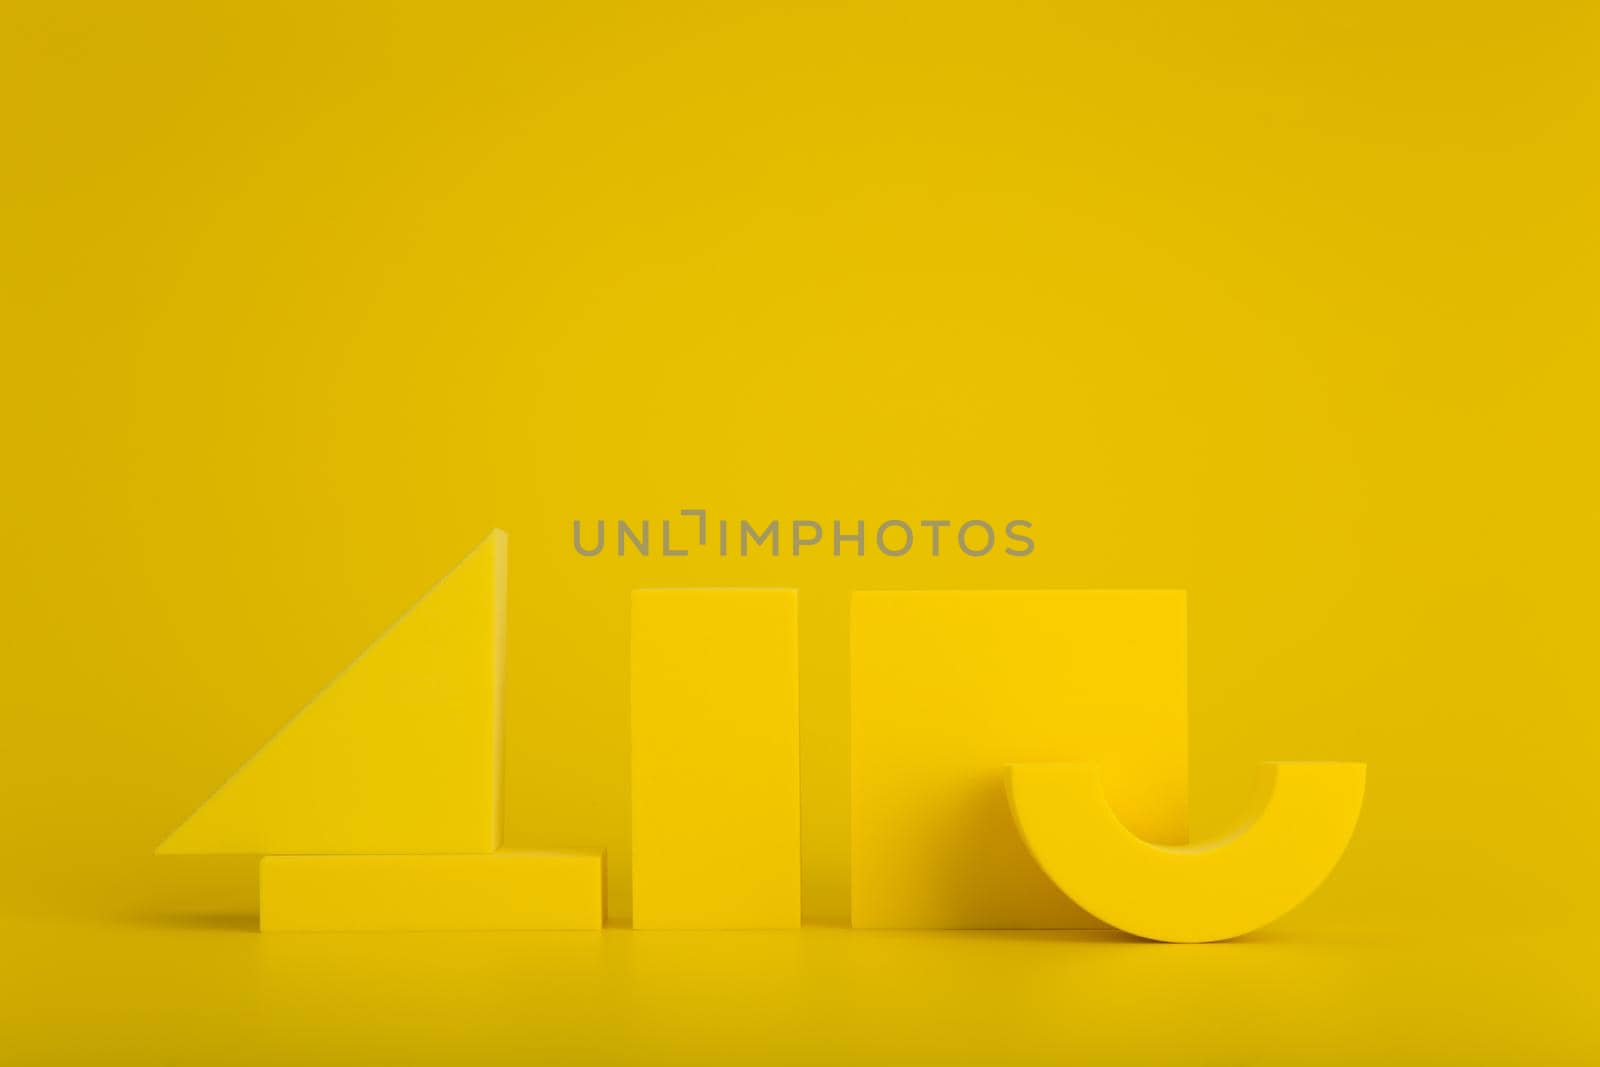 Abstract yellow background with yellow geometric figures against yellow background with copy space by Senorina_Irina